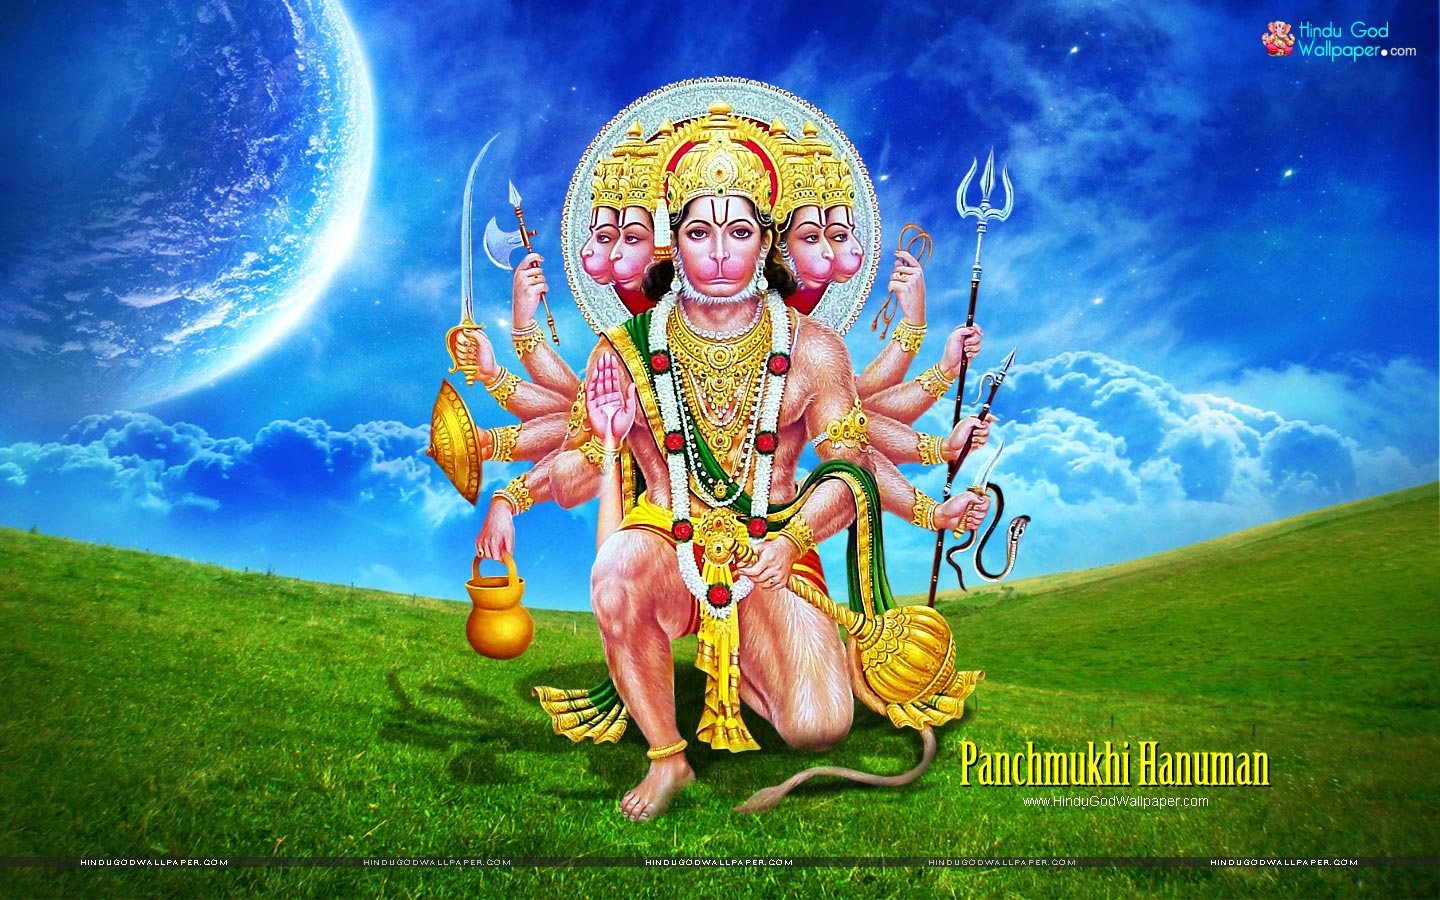 Panchmukhi Hanuman Wallpapers for PC Download